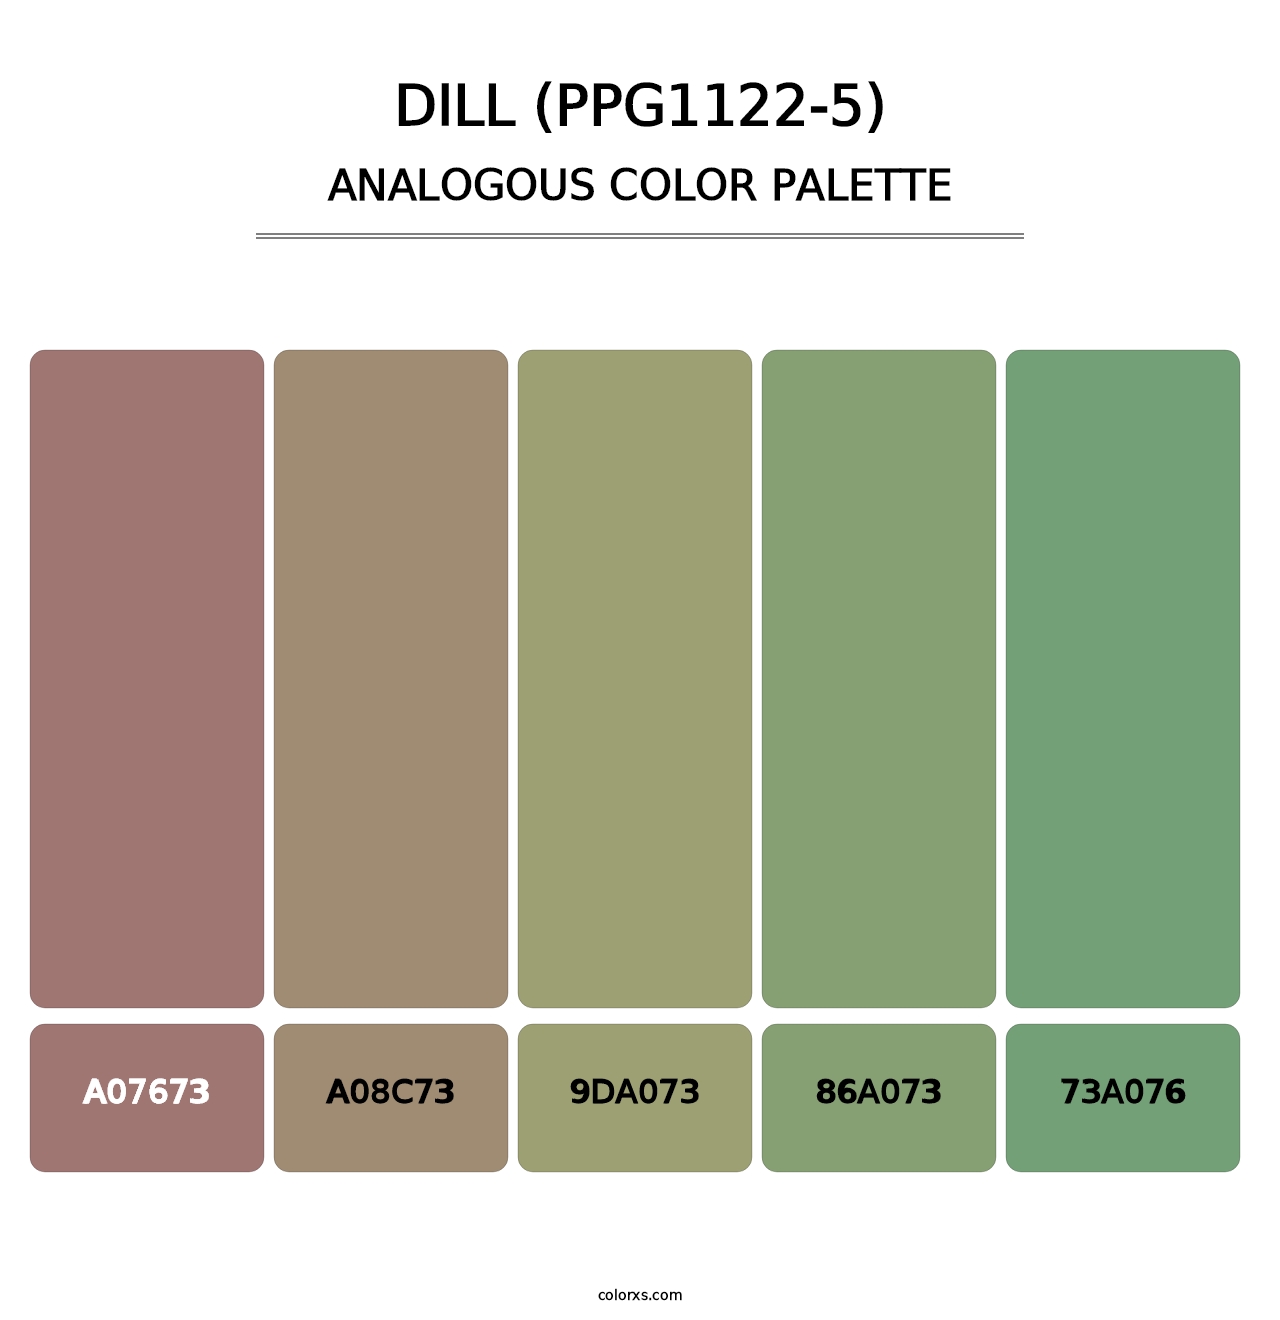 Dill (PPG1122-5) - Analogous Color Palette